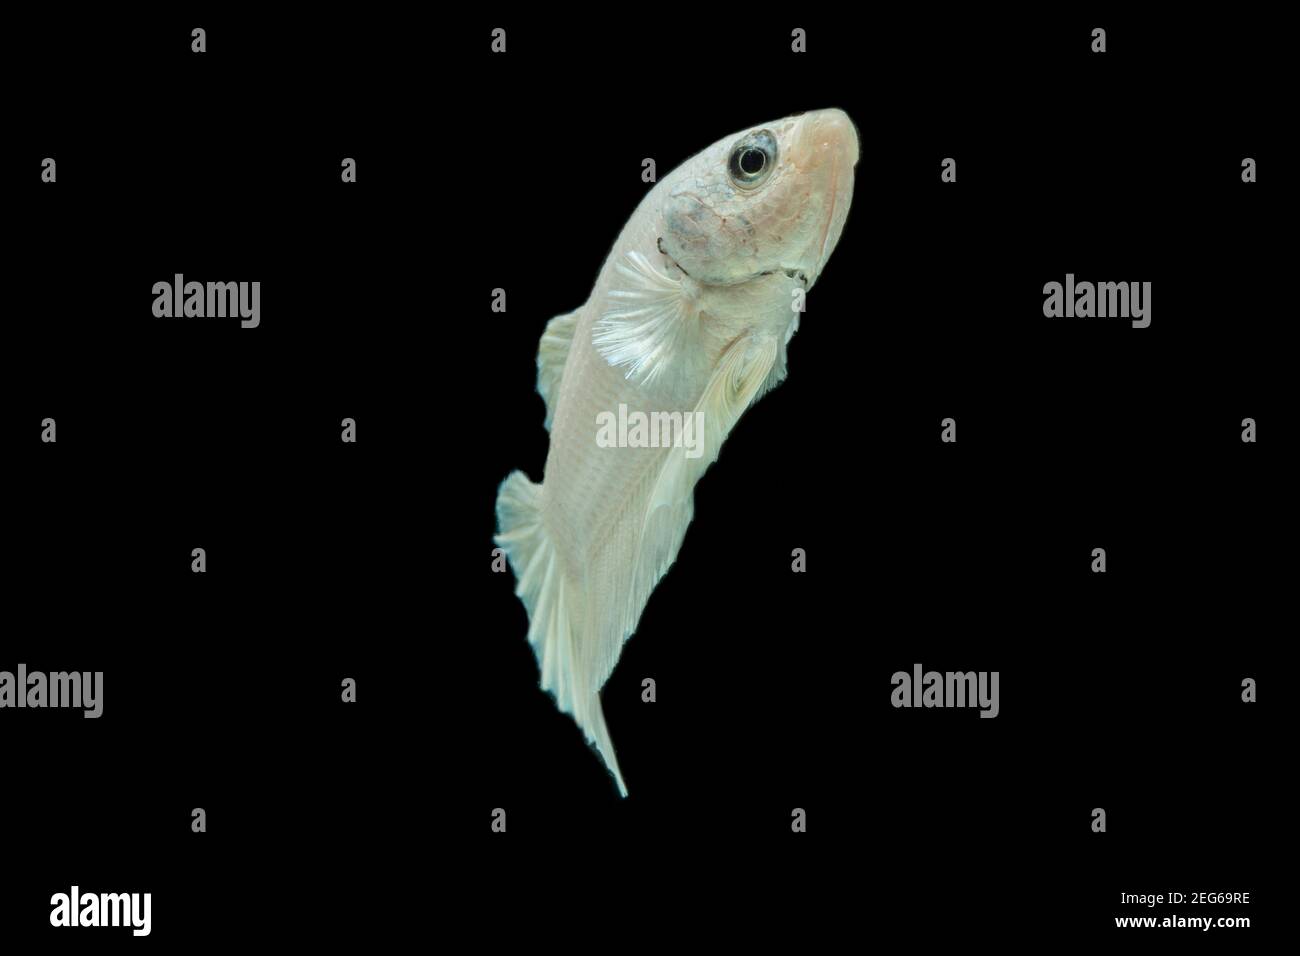 white platinum Betta fish,Siamese fighting fish,Betta splendens,on black background Stock Photo